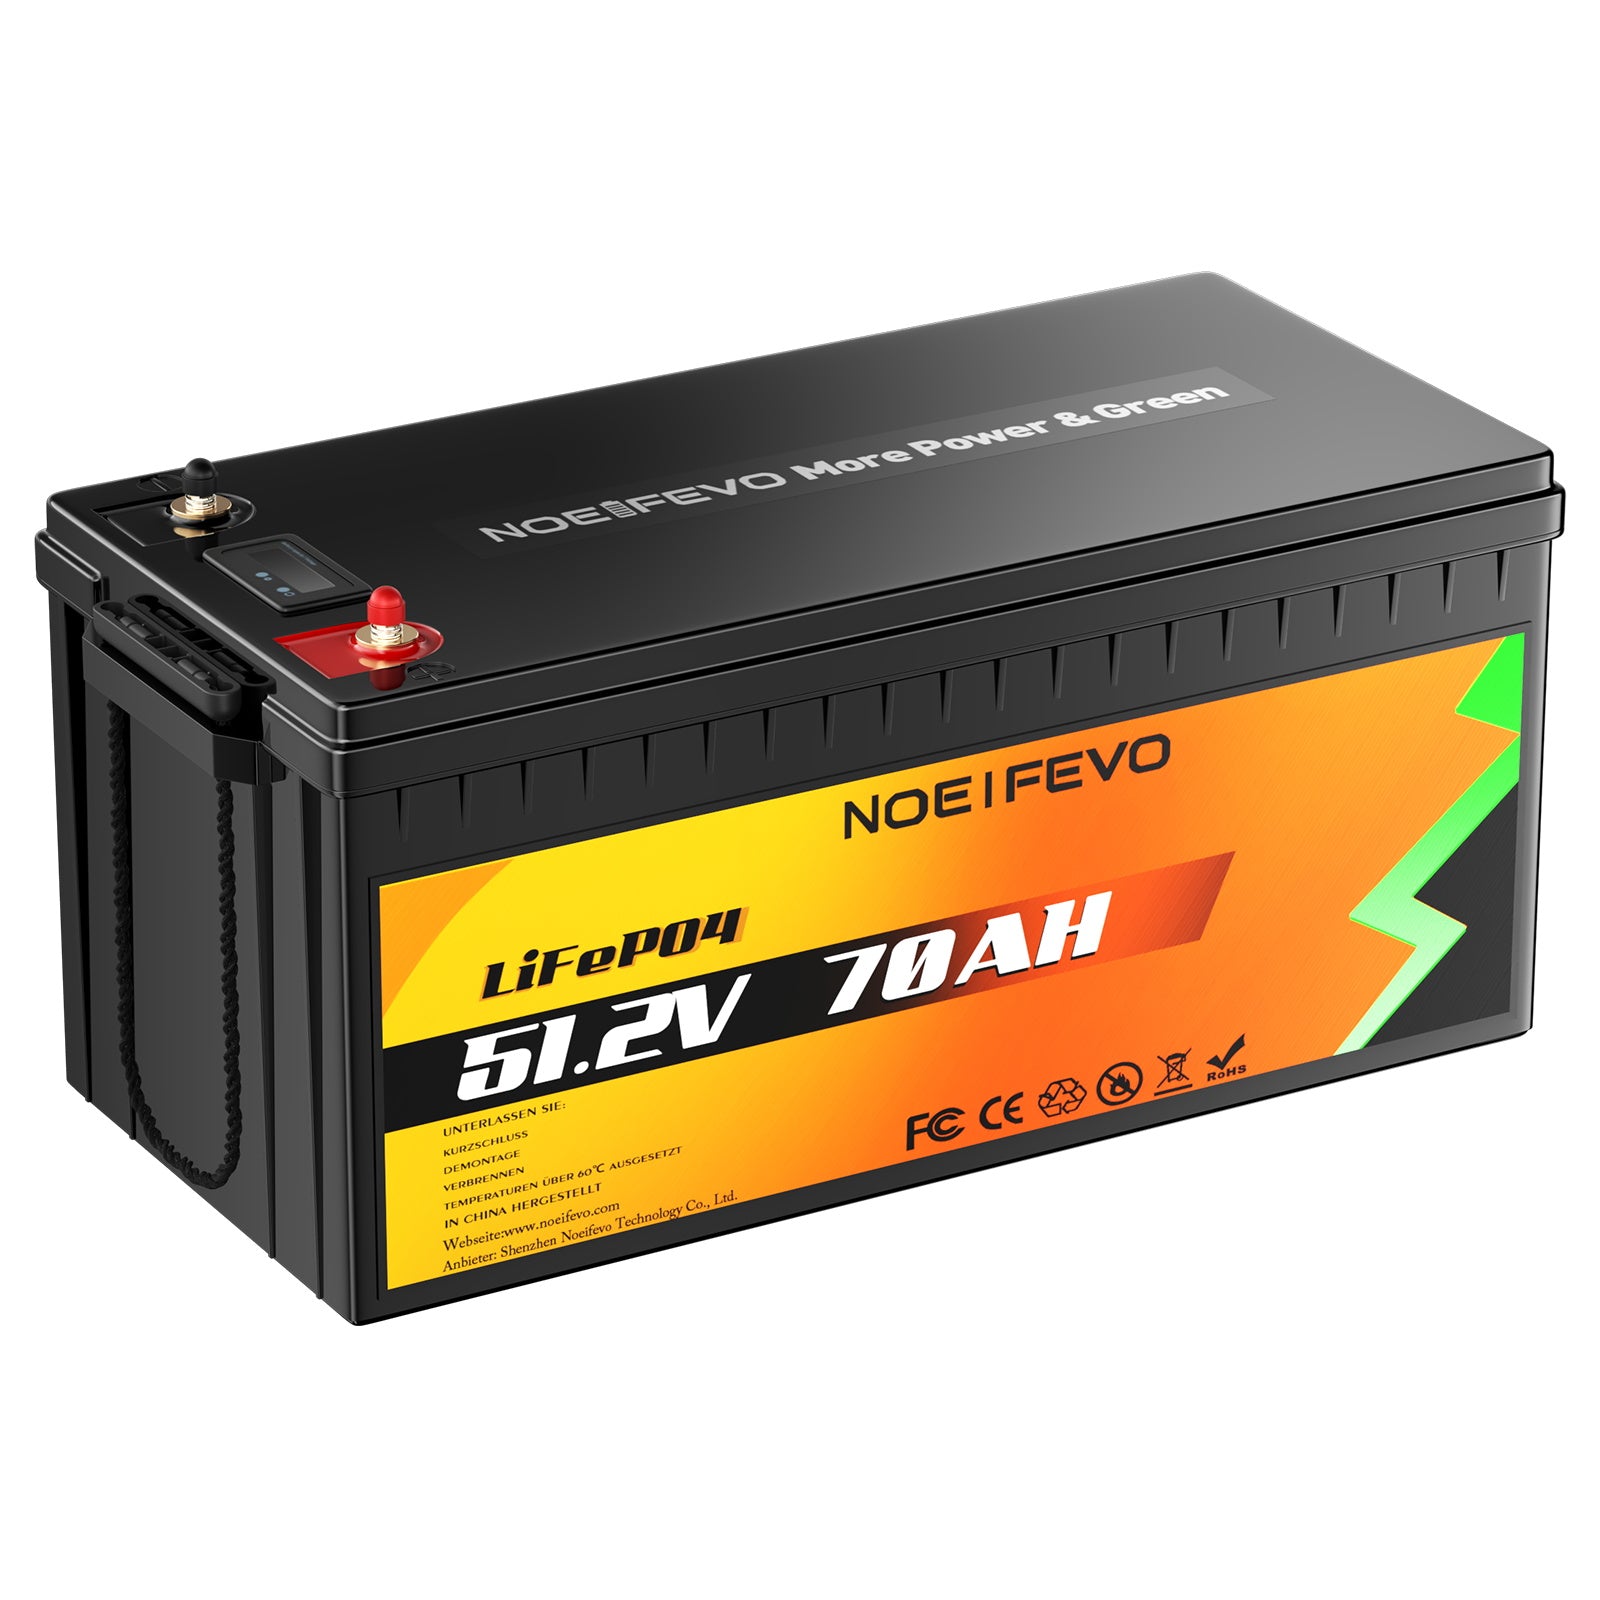 NOEIFEVO D4870 51.2V 70AH Lithium Eisenfosfat Bateria LiFePO4 Akumulator z 80A BMS 